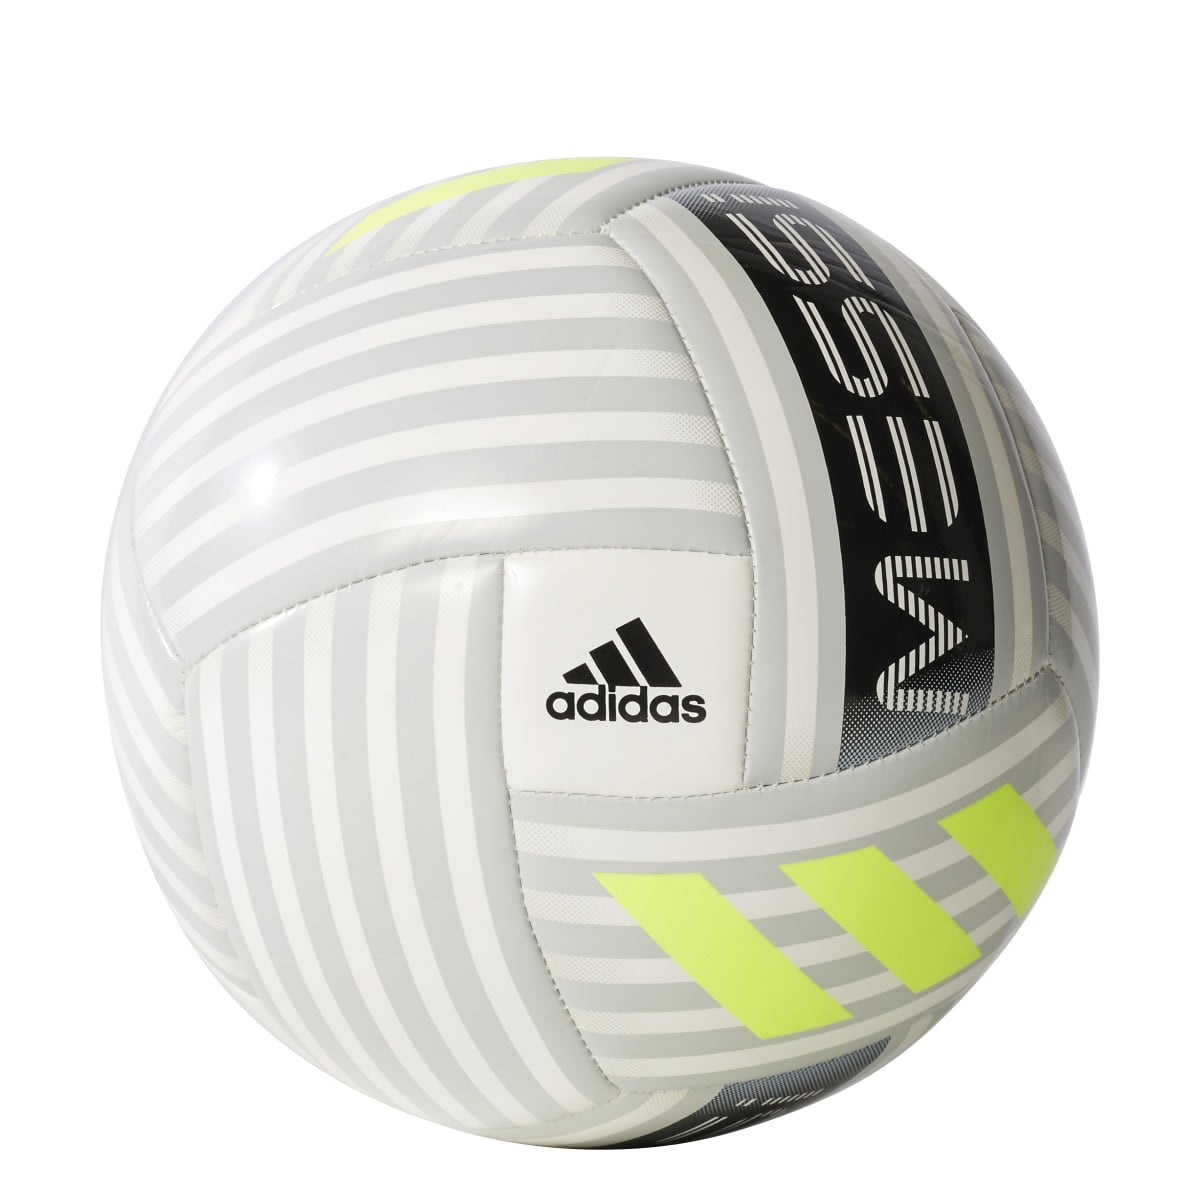 Adidas Messi Glider Soccer Ball - White 